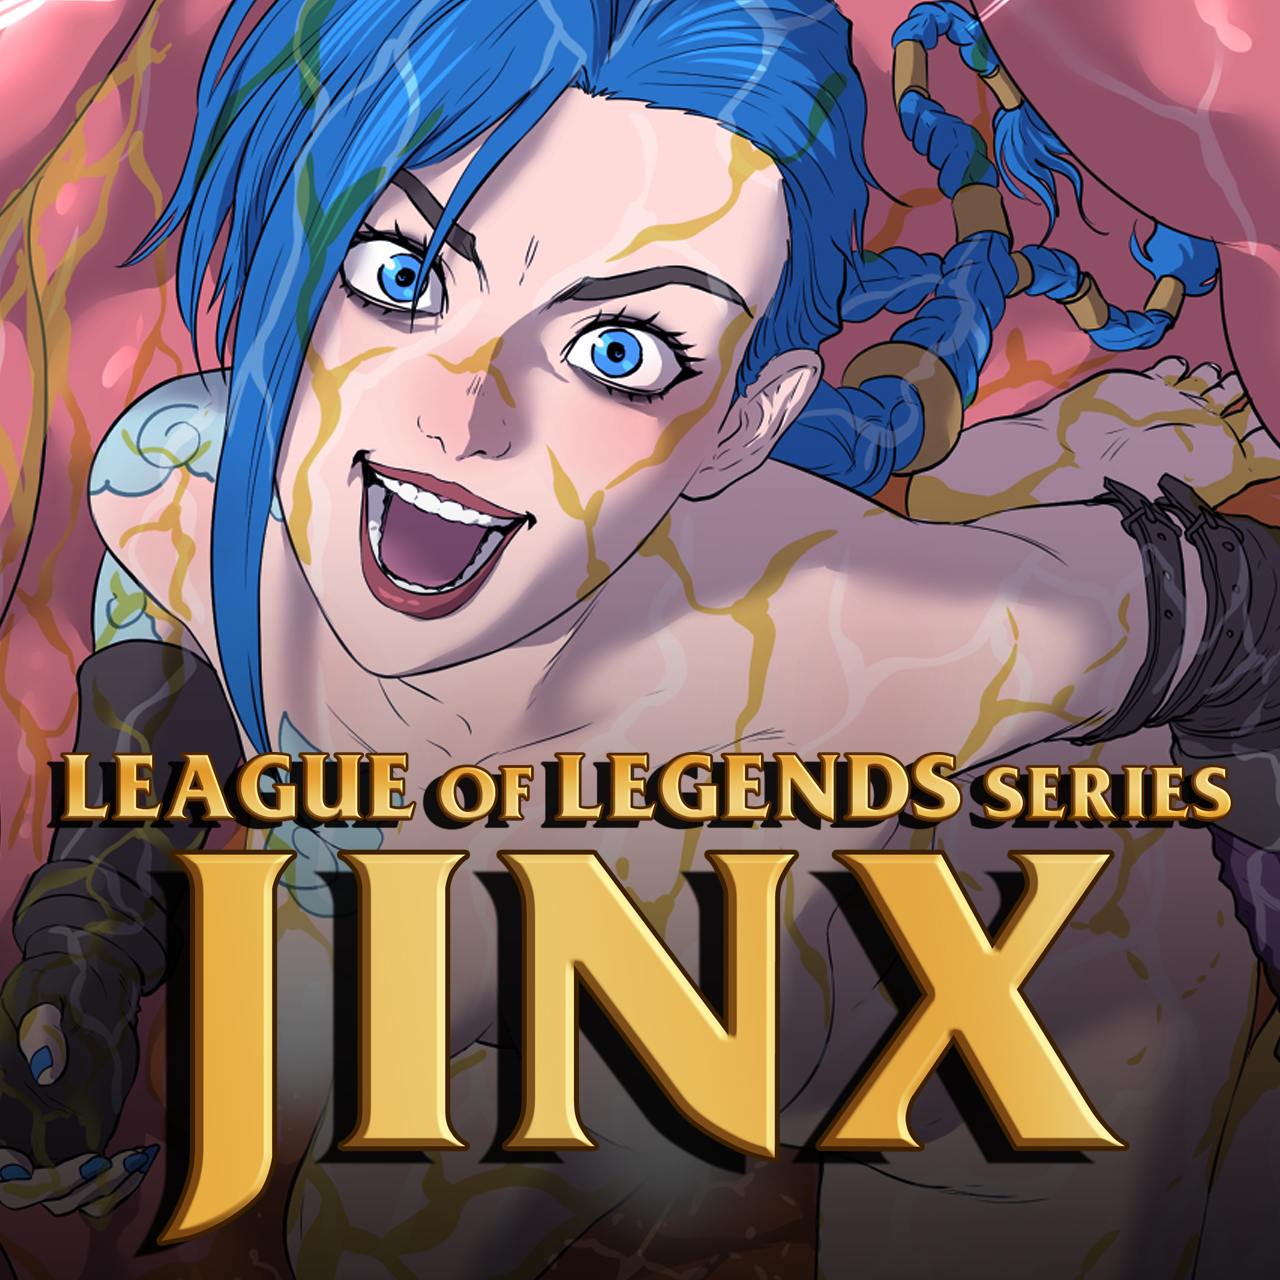 League of Legends Series: Jinx